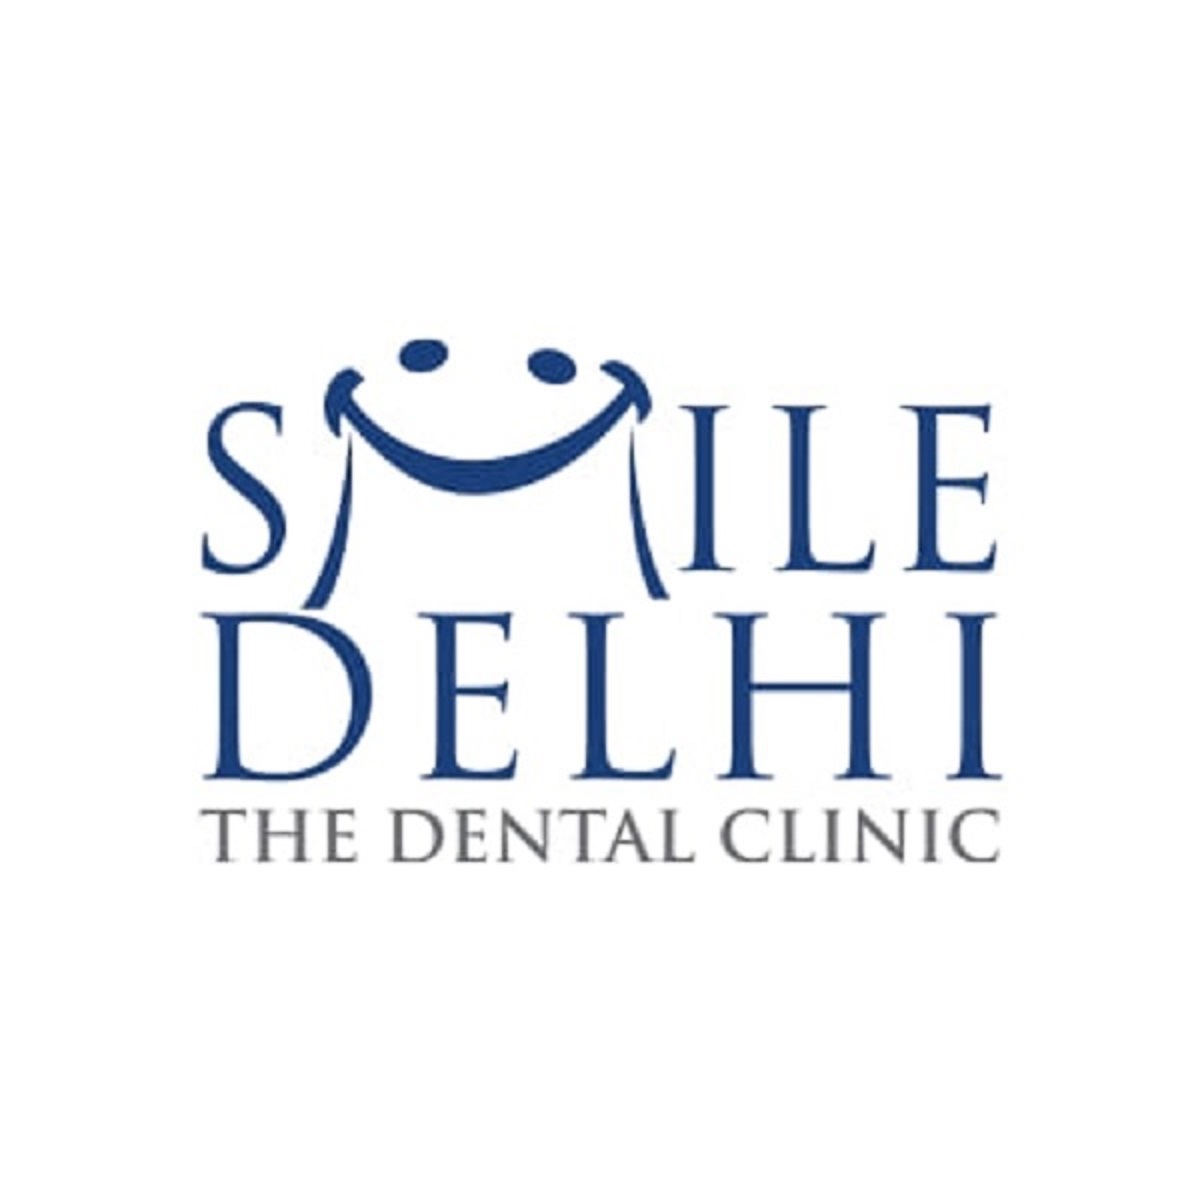 Smile Delhi - The Dental Clinic|Hospitals|Medical Services